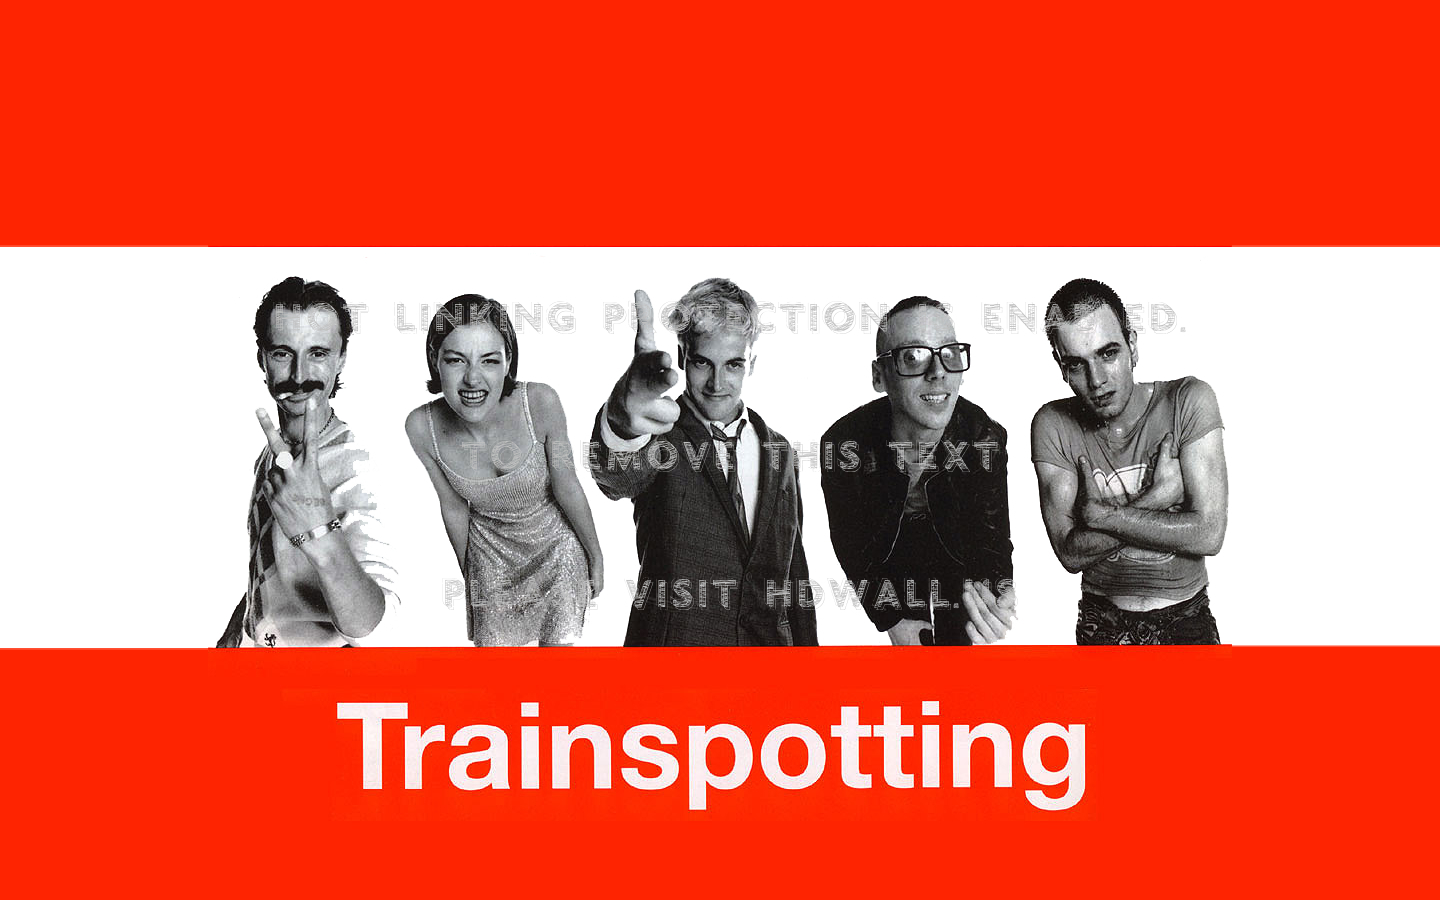 trainspotting 벽지,사람들,사회 단체,본문,폰트,빨간